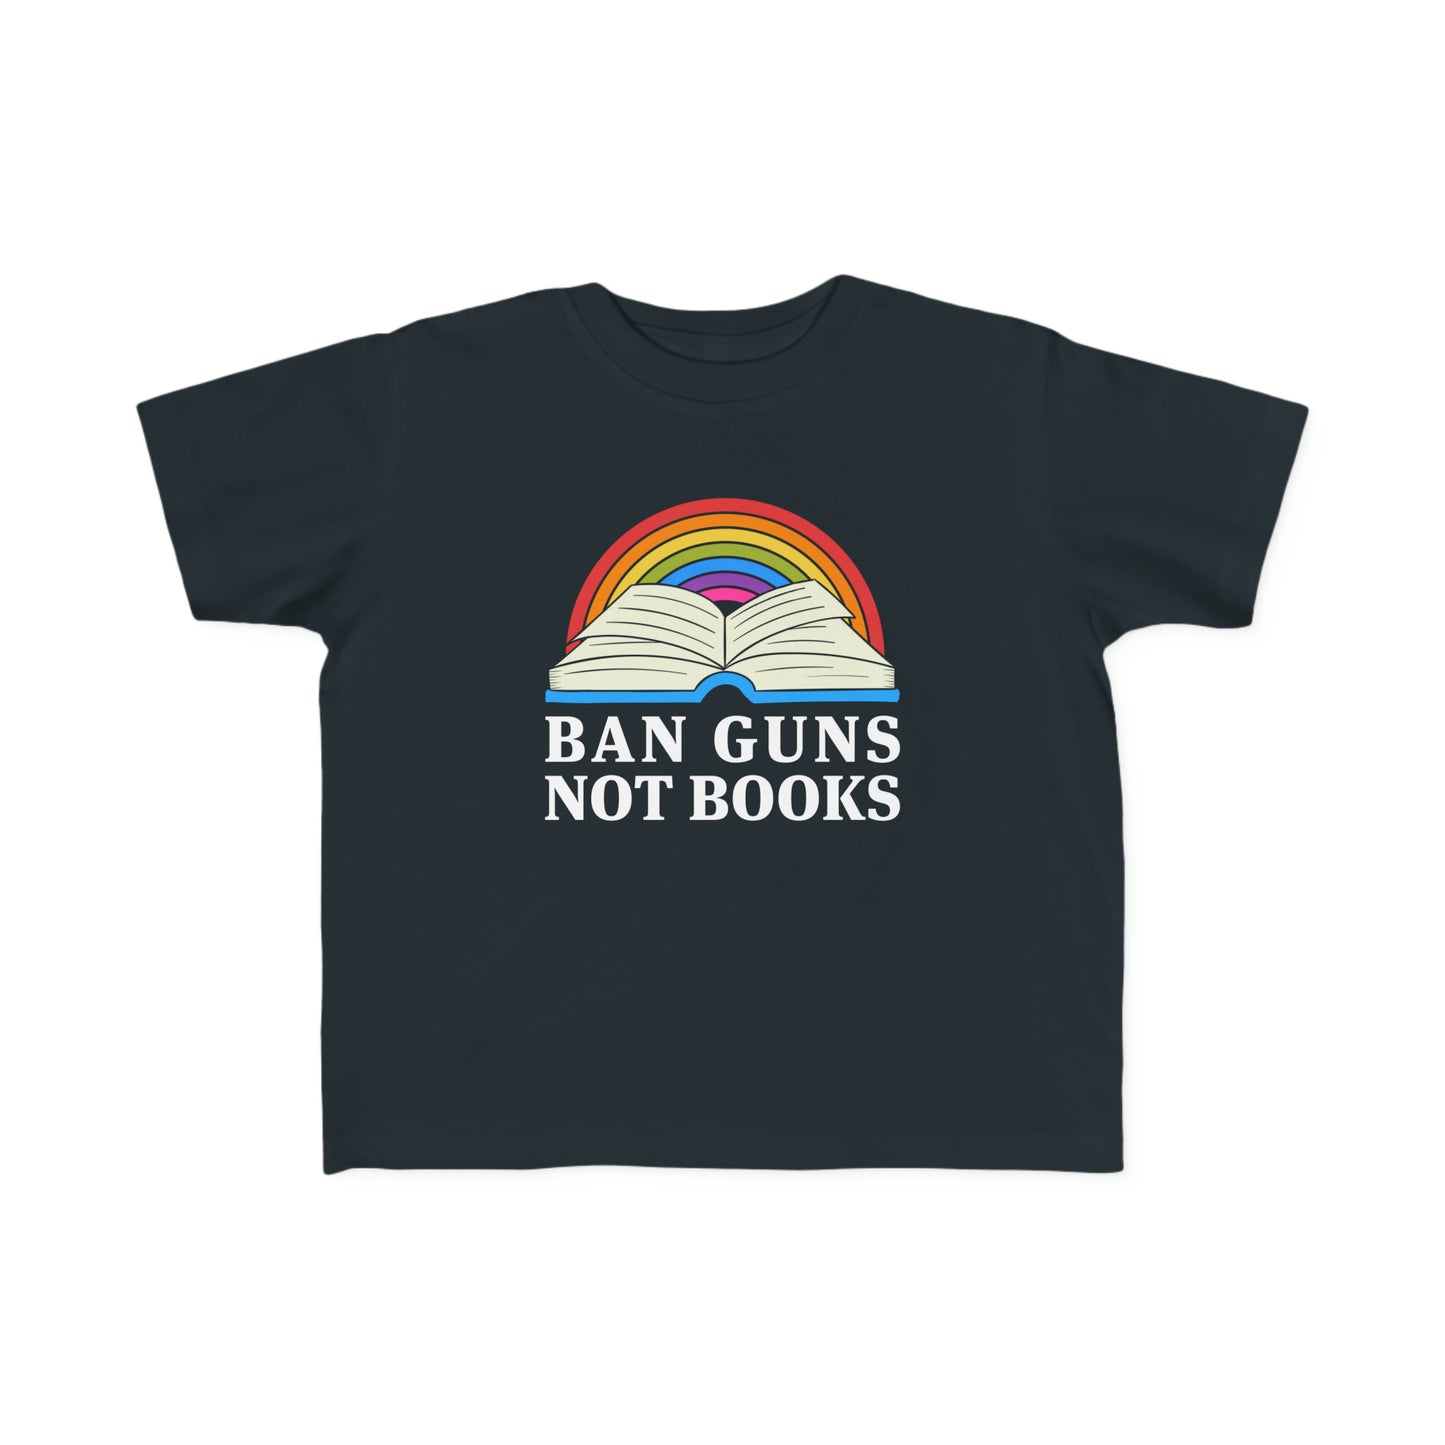 “Ban Guns Not Books” Toddler's Tee